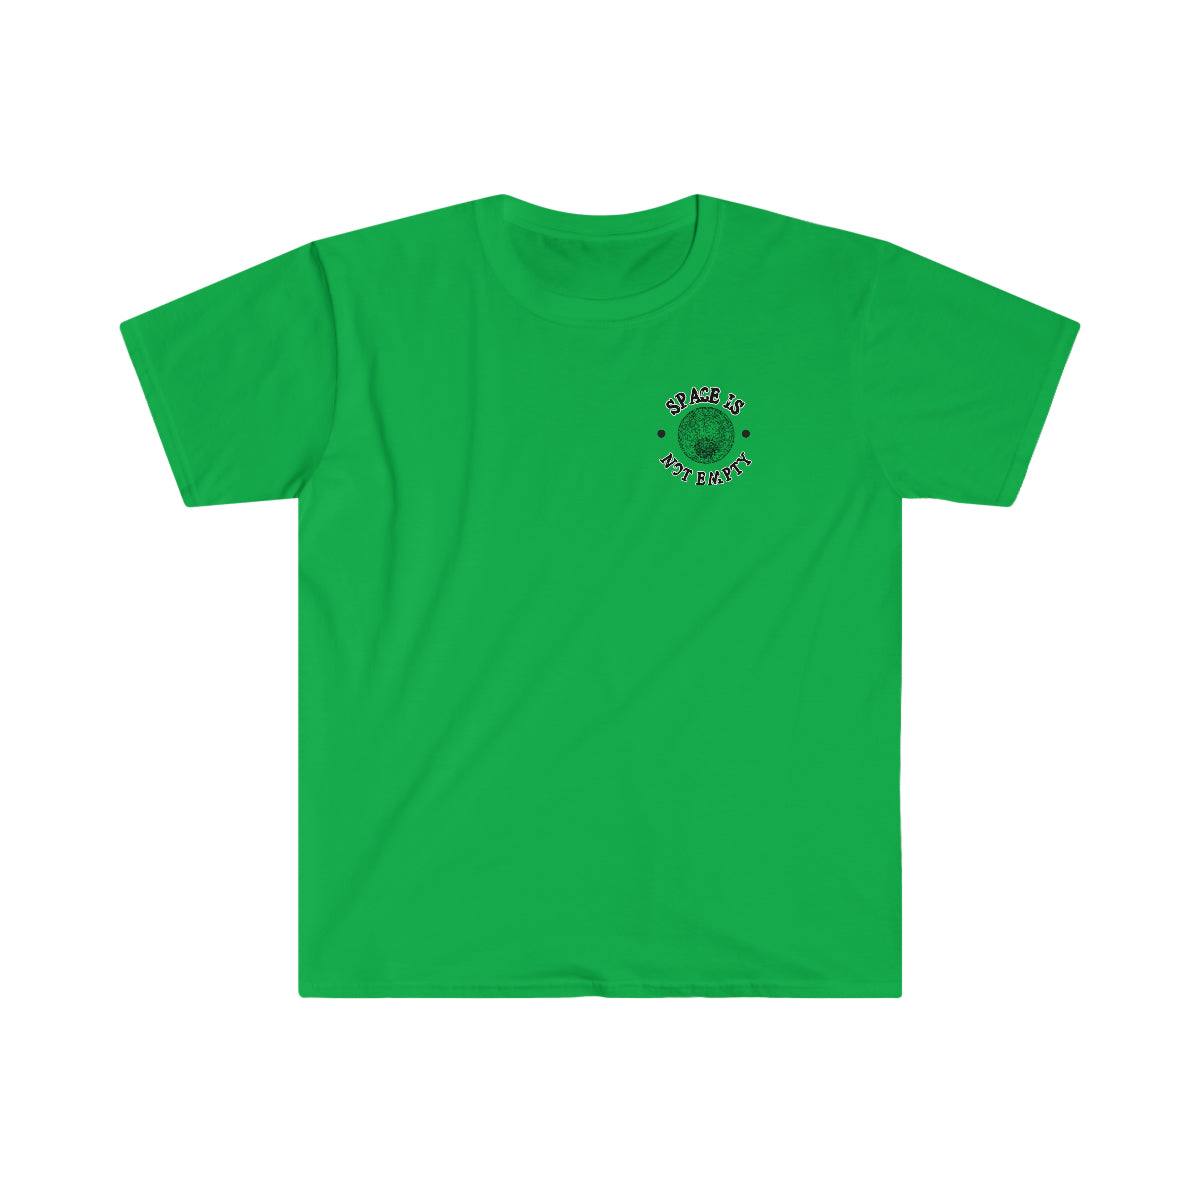 A green Apollo Command & Service Module T-Shirt with a historic Apollo space program logo.